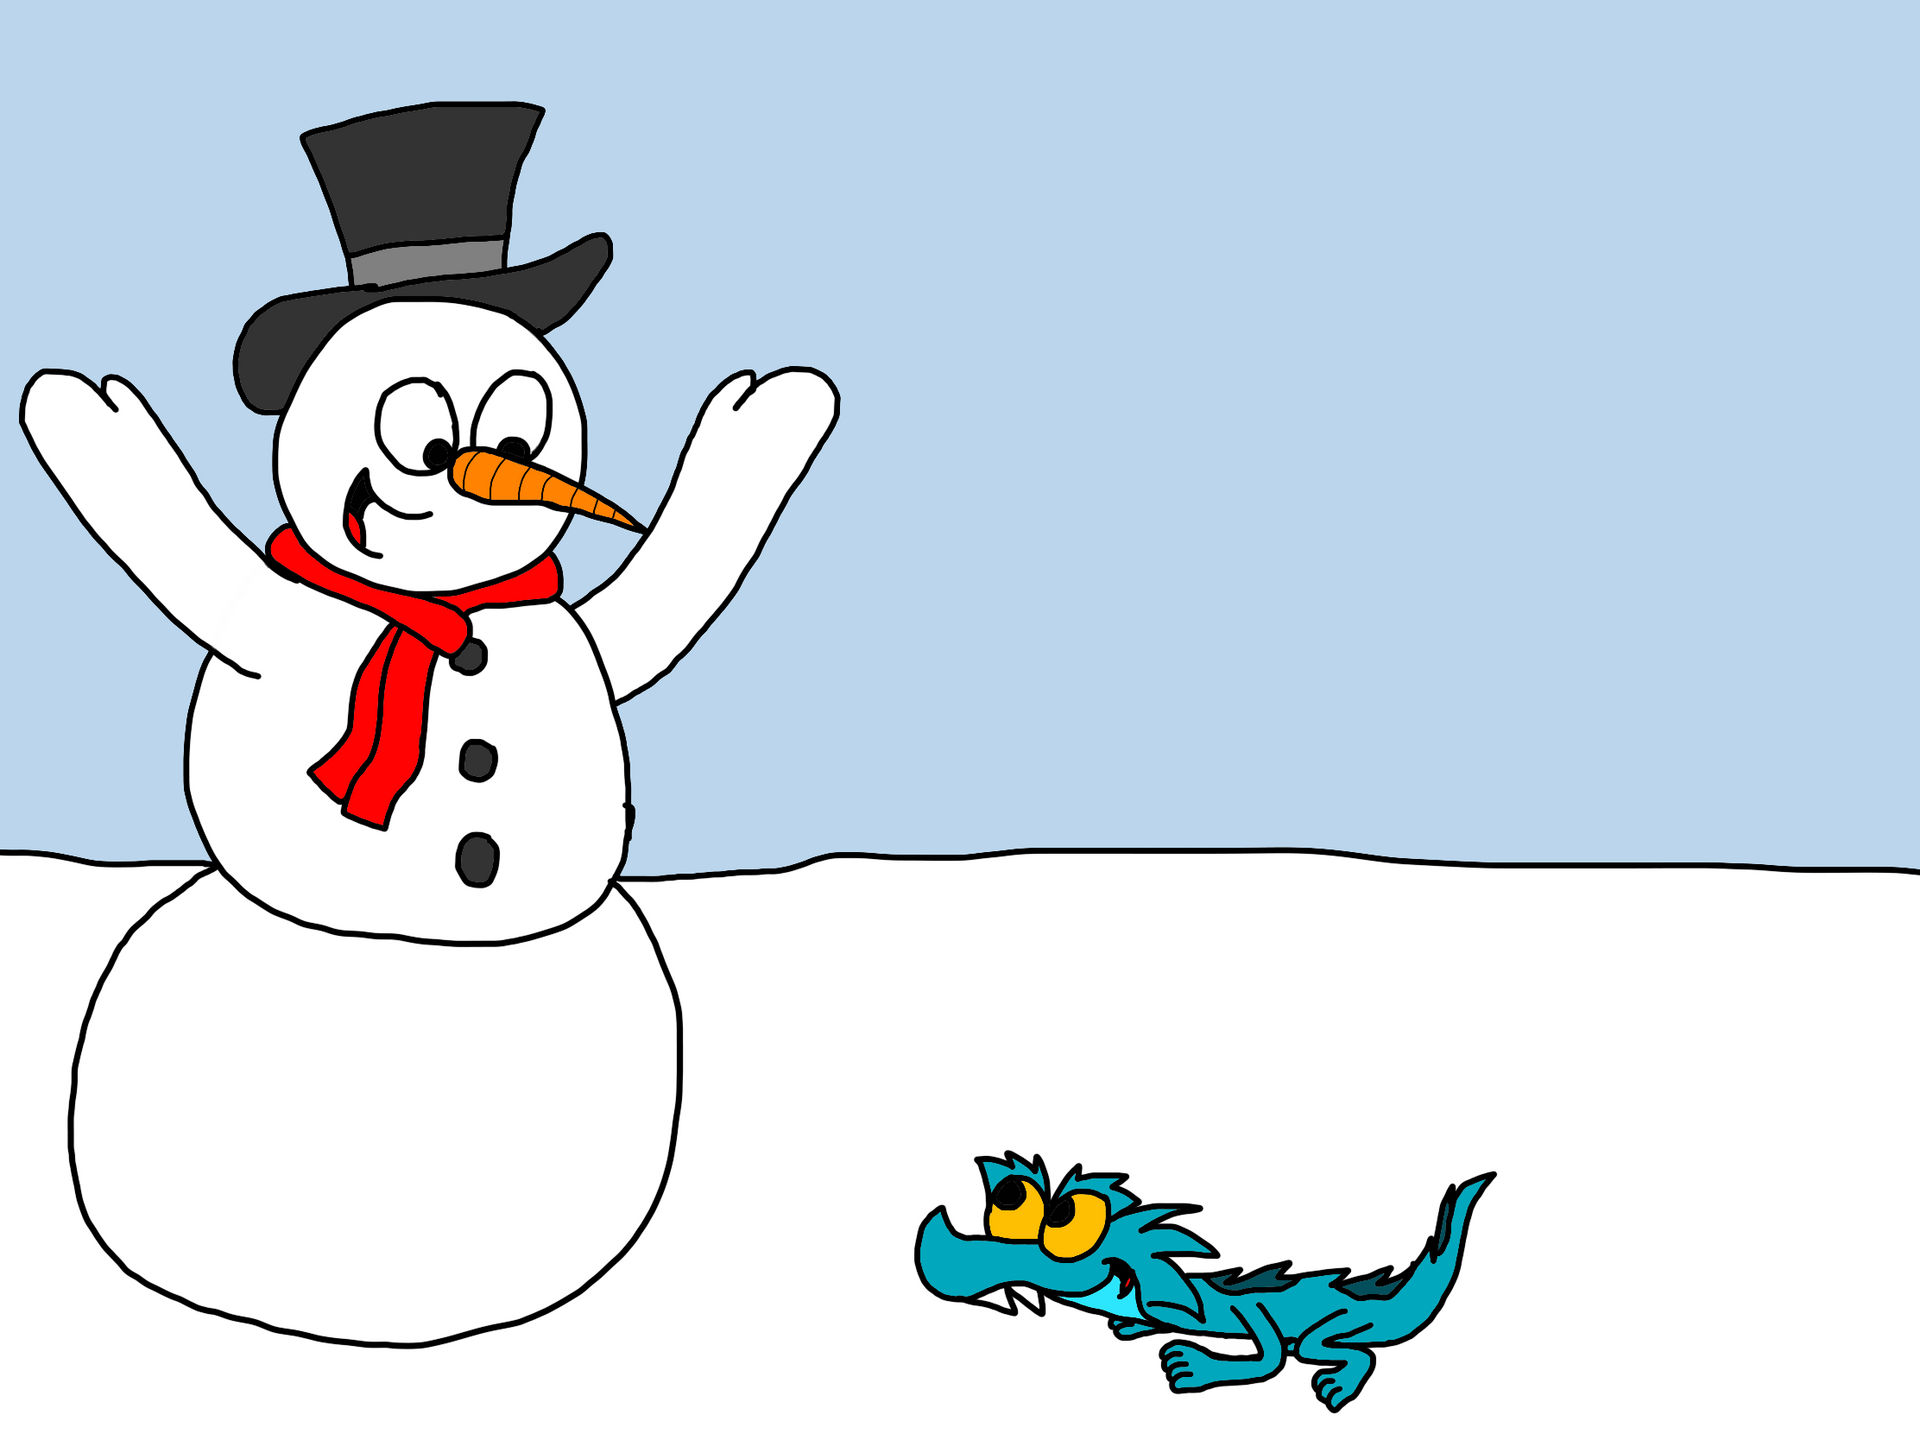 Magic Christmas: Snowman by gameandshowlover on DeviantArt